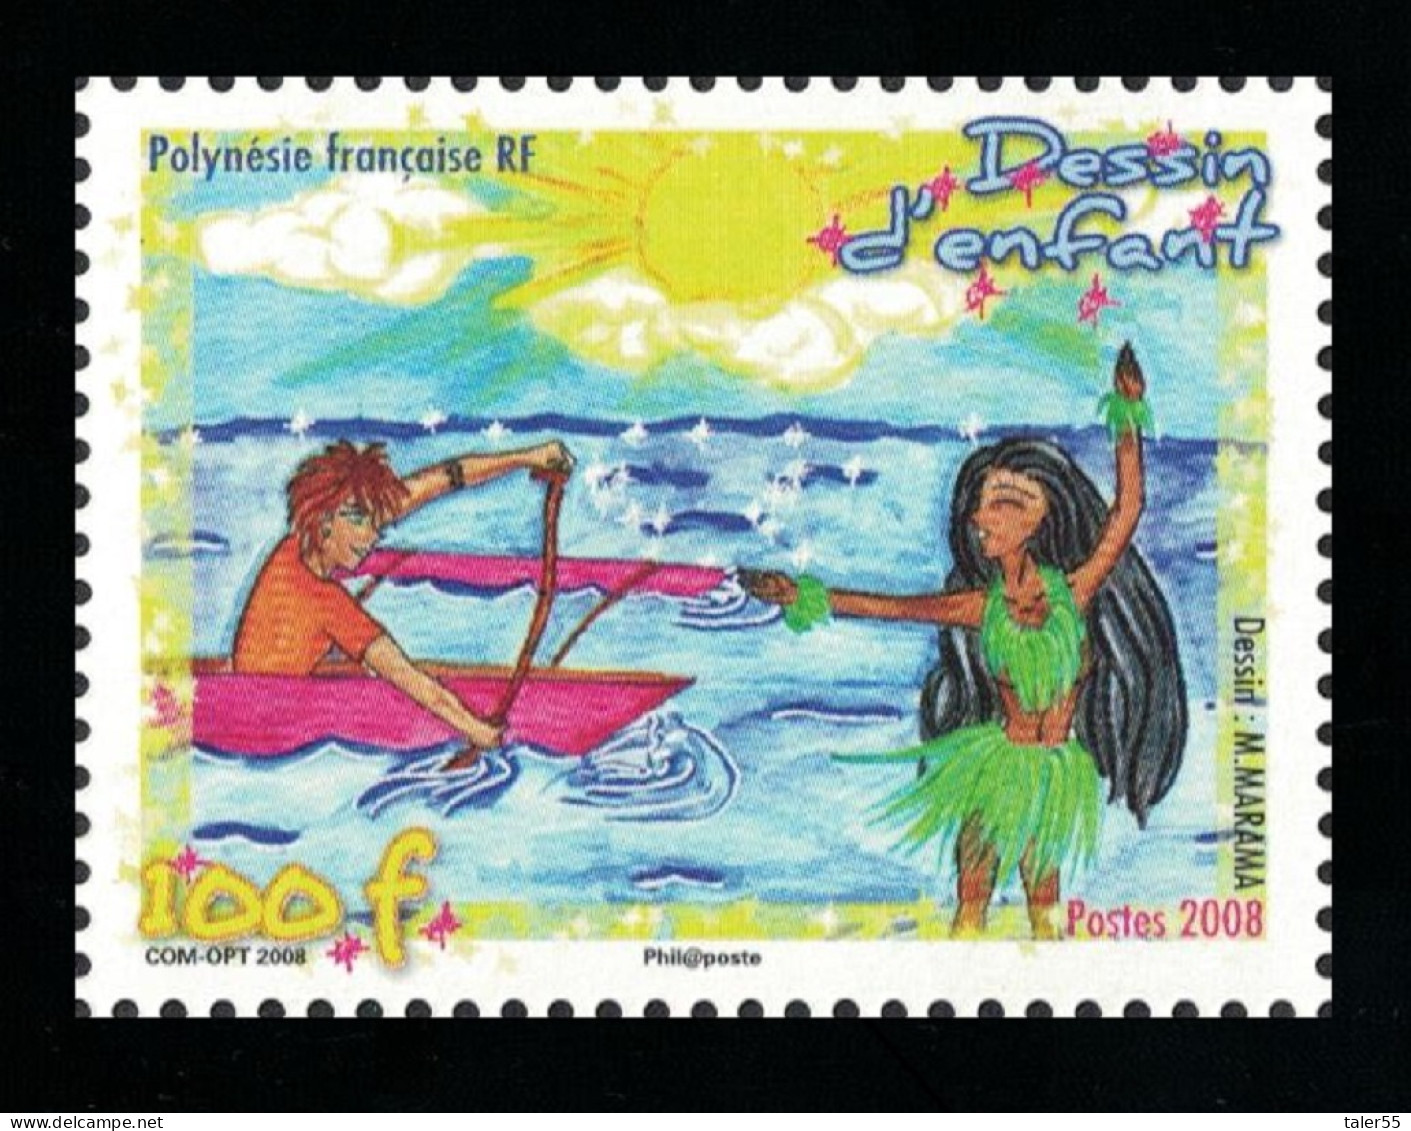 Fr. Polynesia Christmas 2008 Children's Drawings 2008 MNH SG#1109 MI#1061 - Neufs